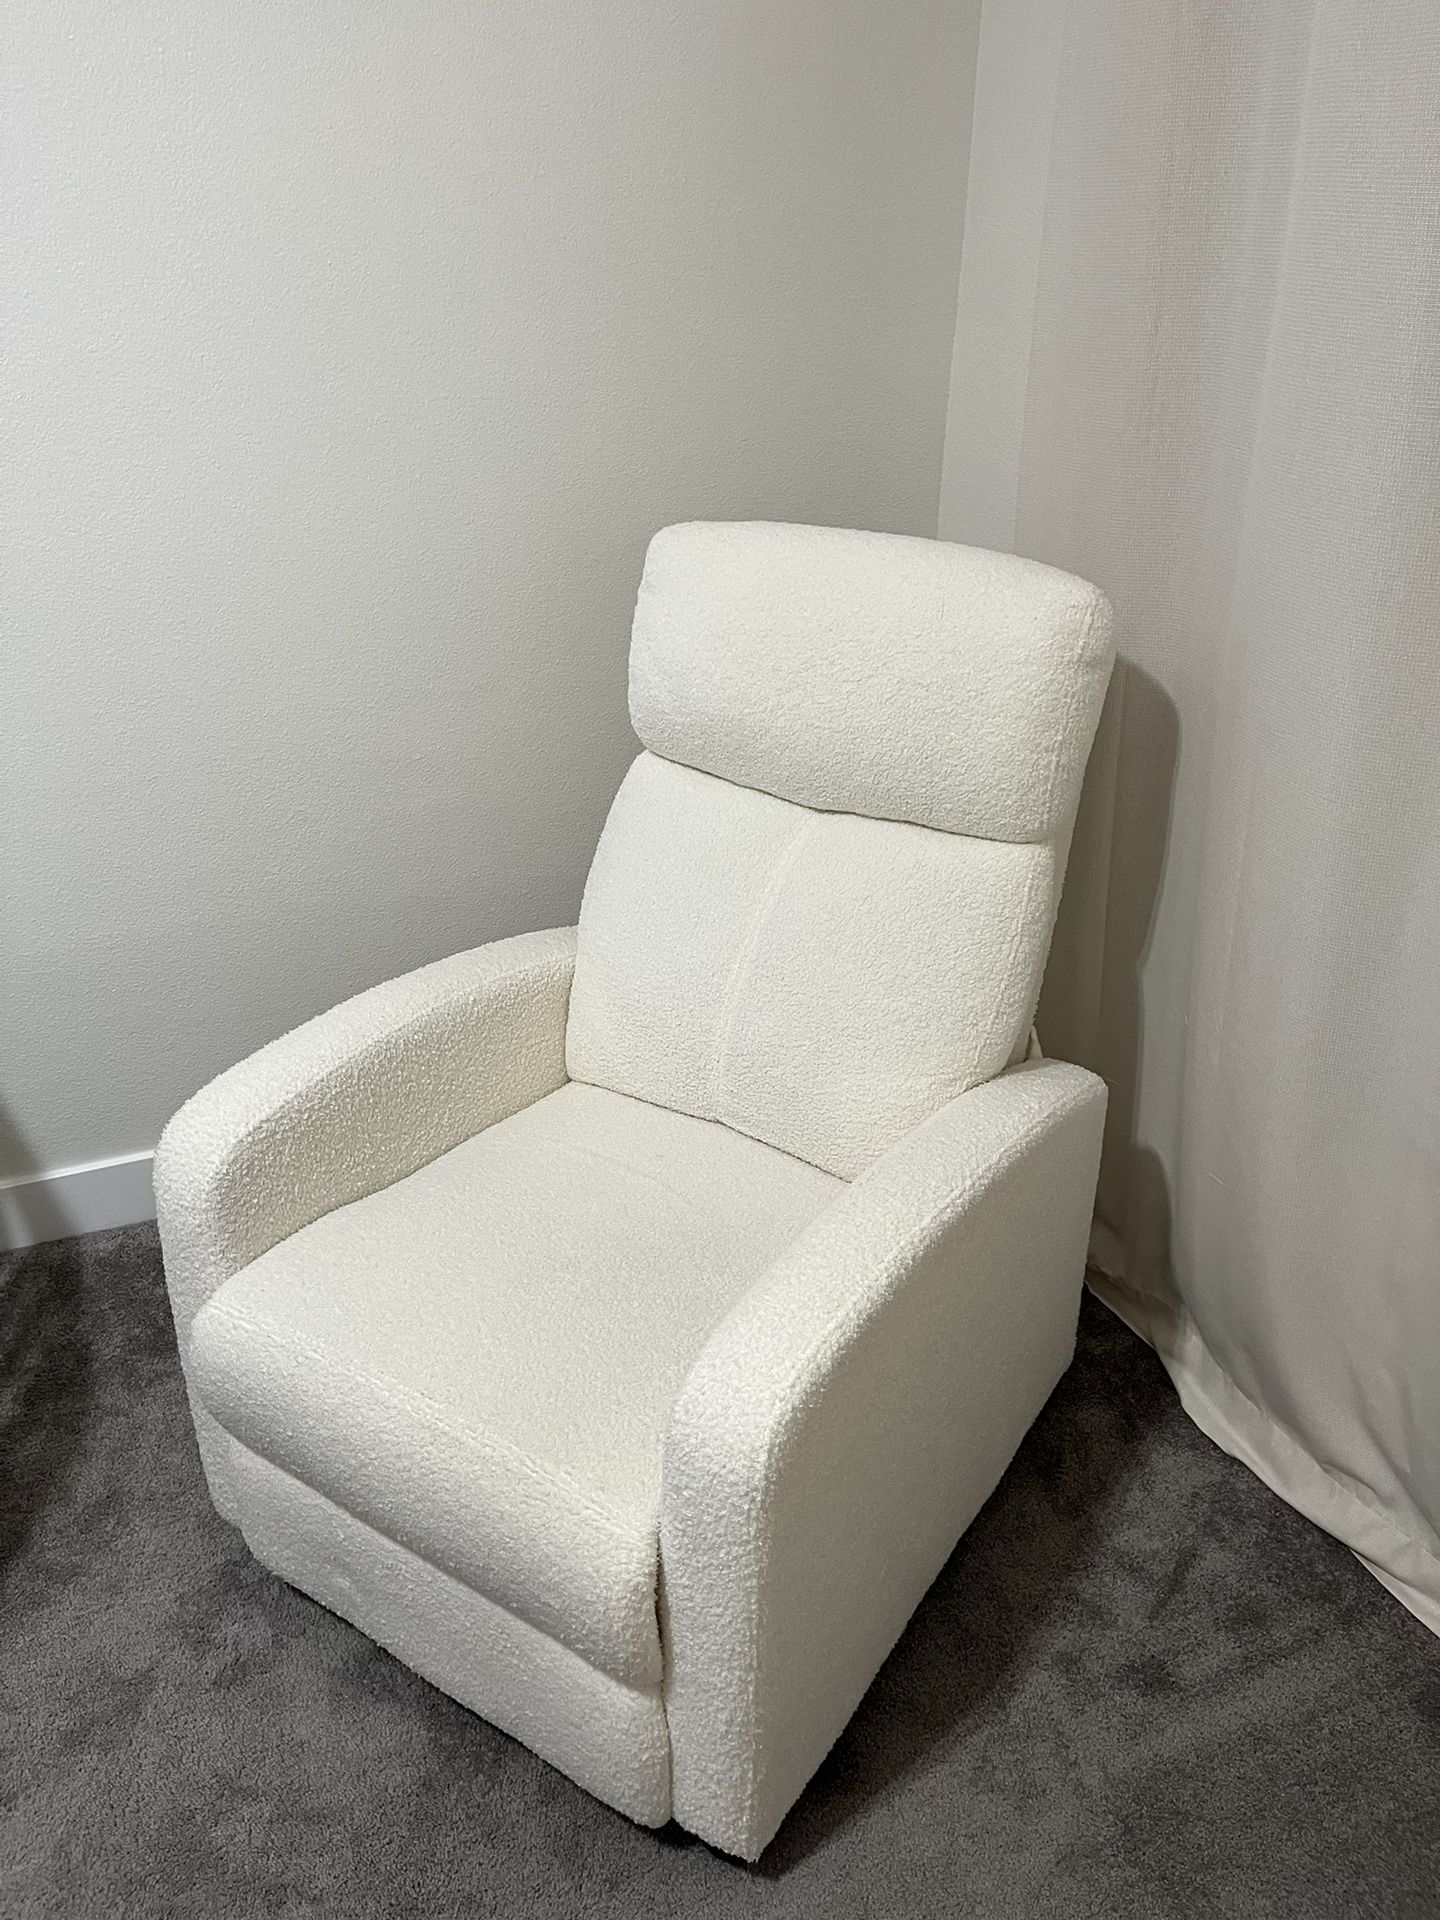 Recliner Chair White $180